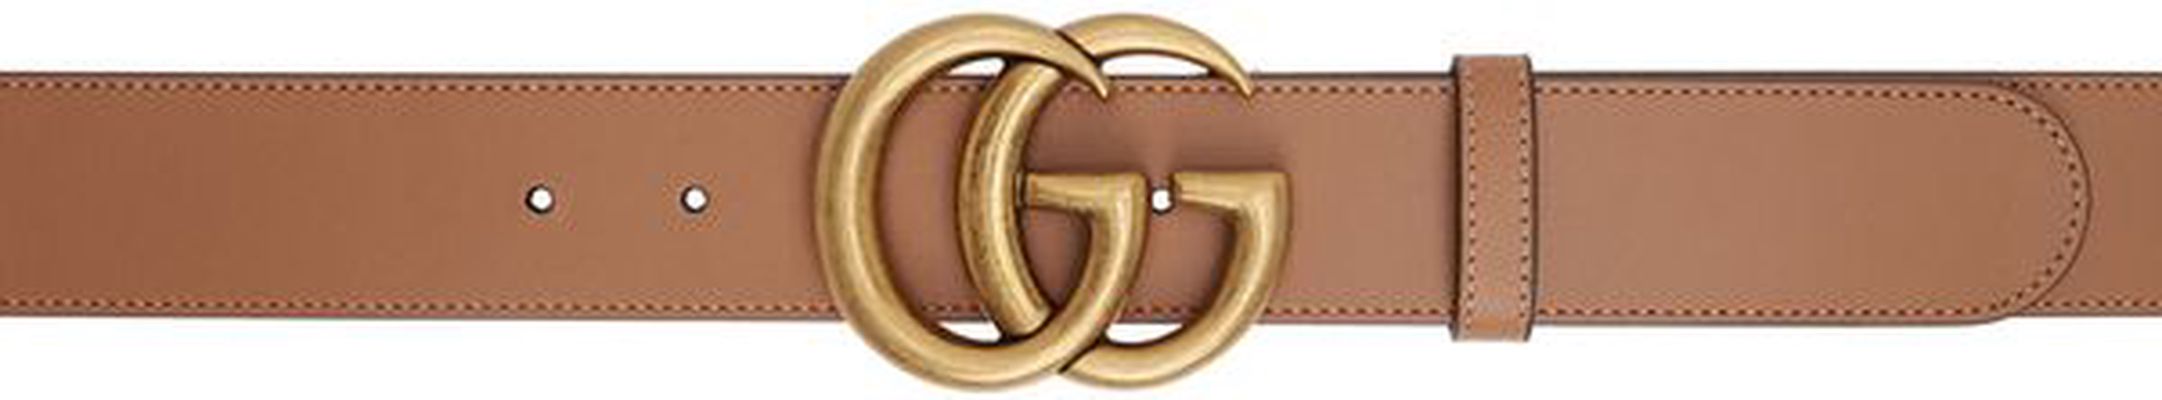 Gucci Tan GG Marmont Belt